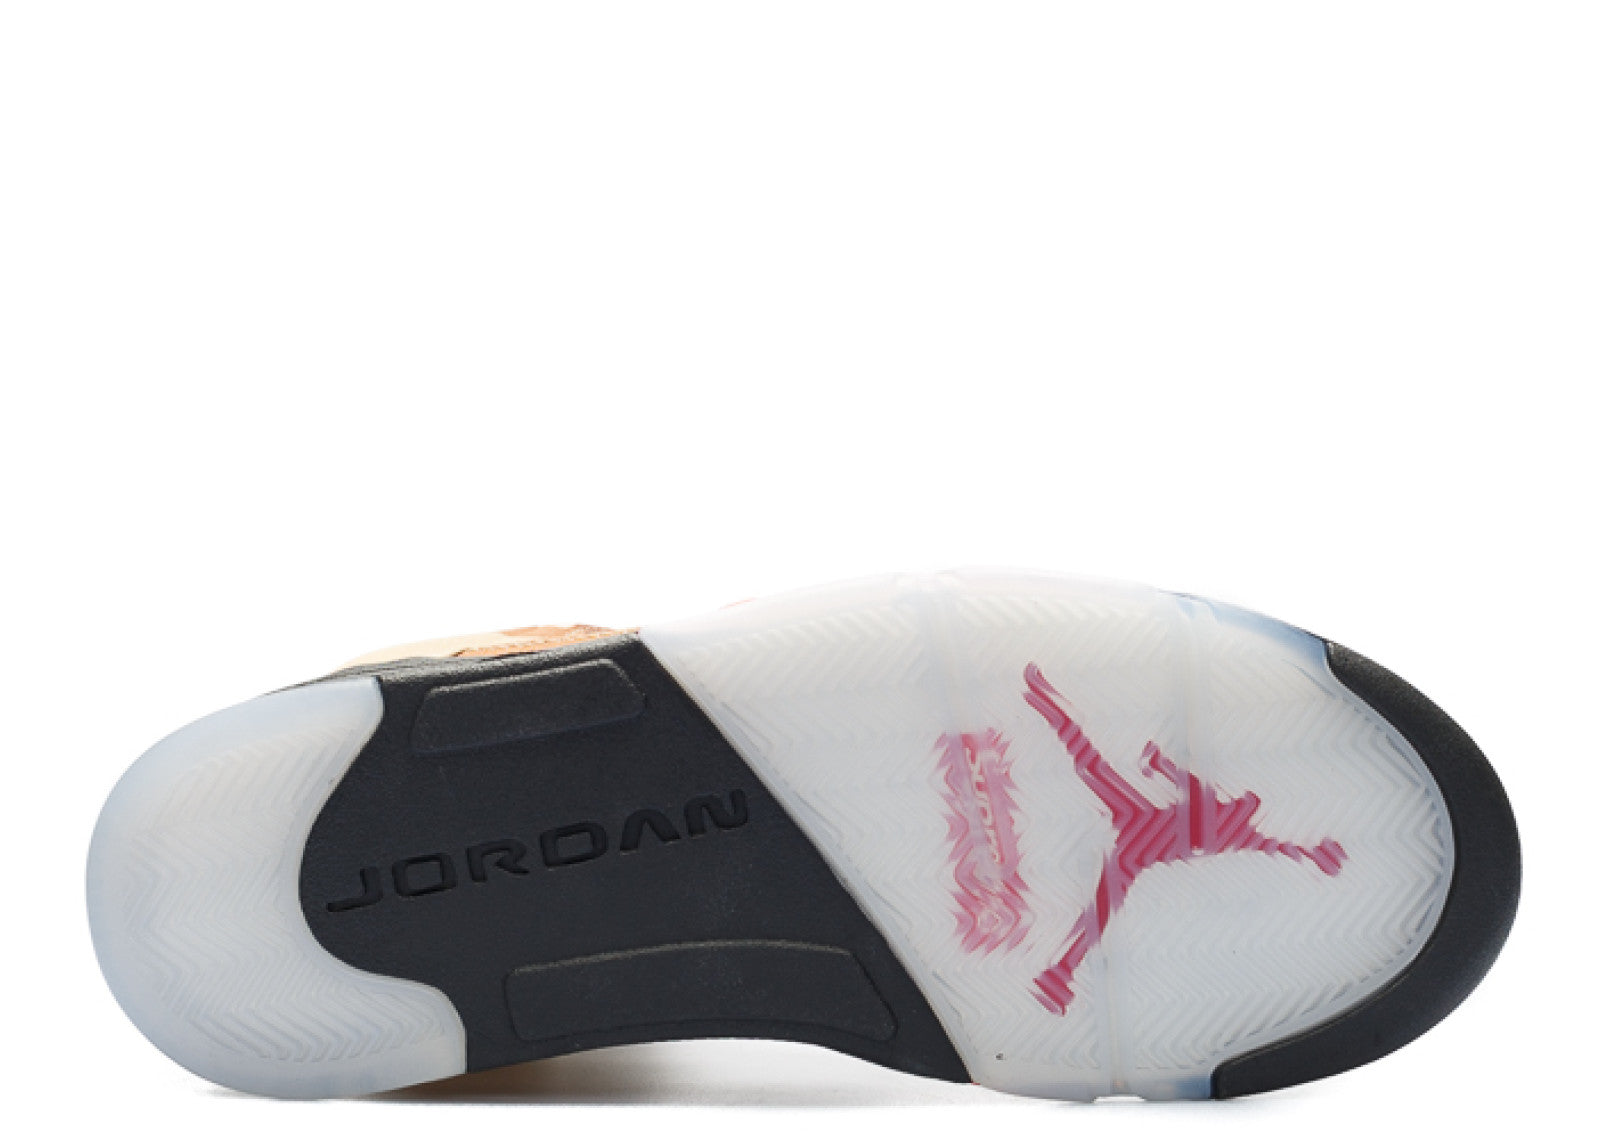 Supreme X Nike Air Jordan 5 Retro ‘Camo’